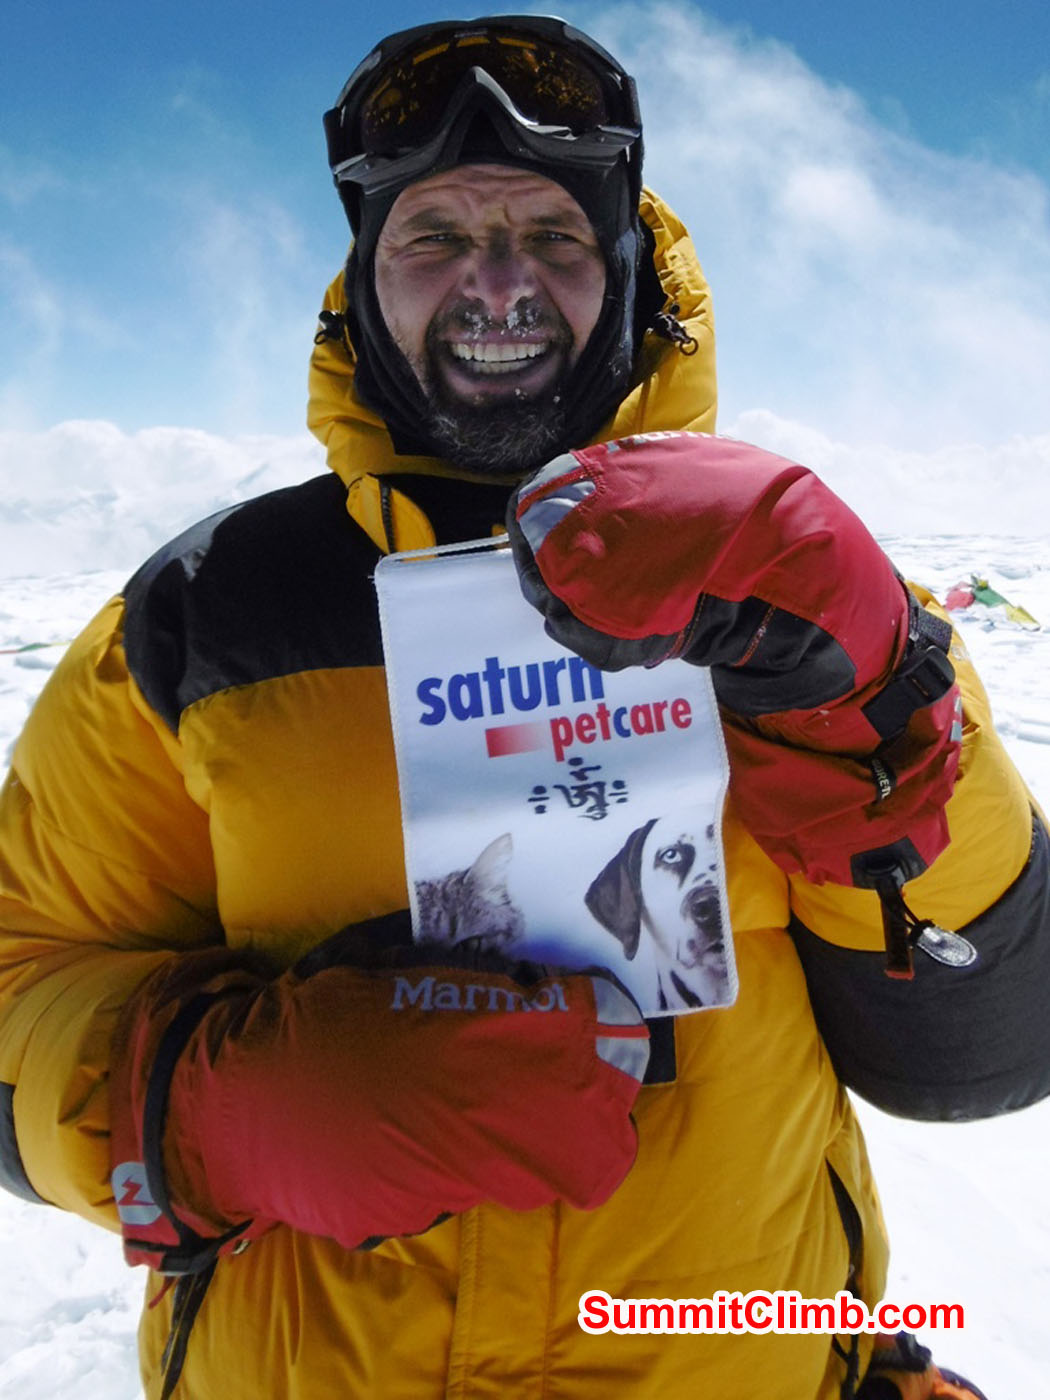 Christian on the summit. Stefan Simchen Photo